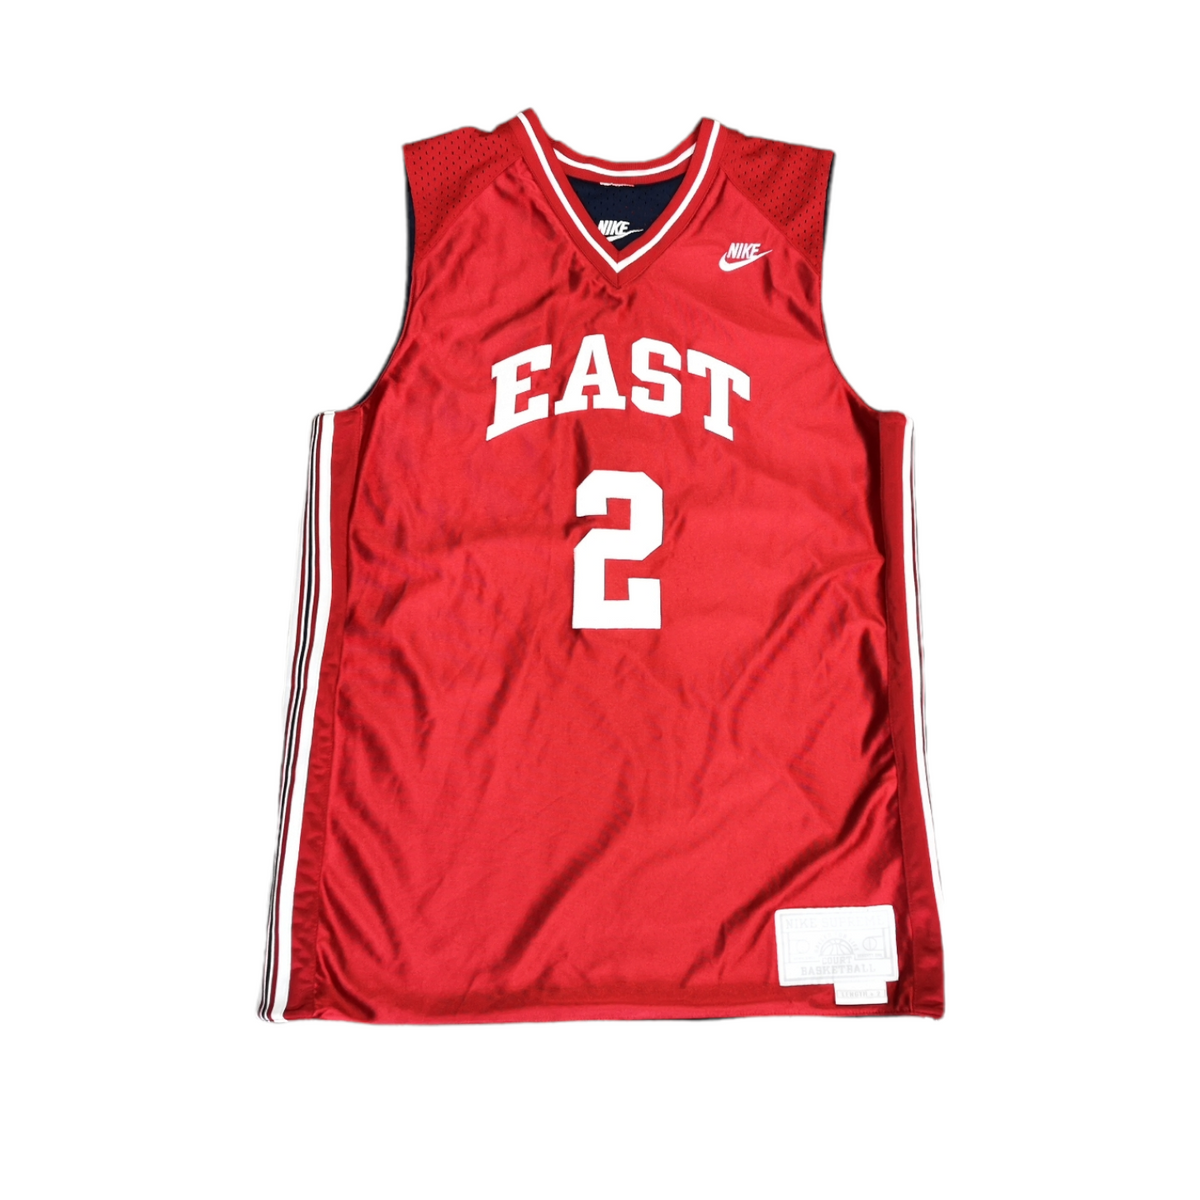 Y2K Nike Reversible Basketball Jersey - Size Large